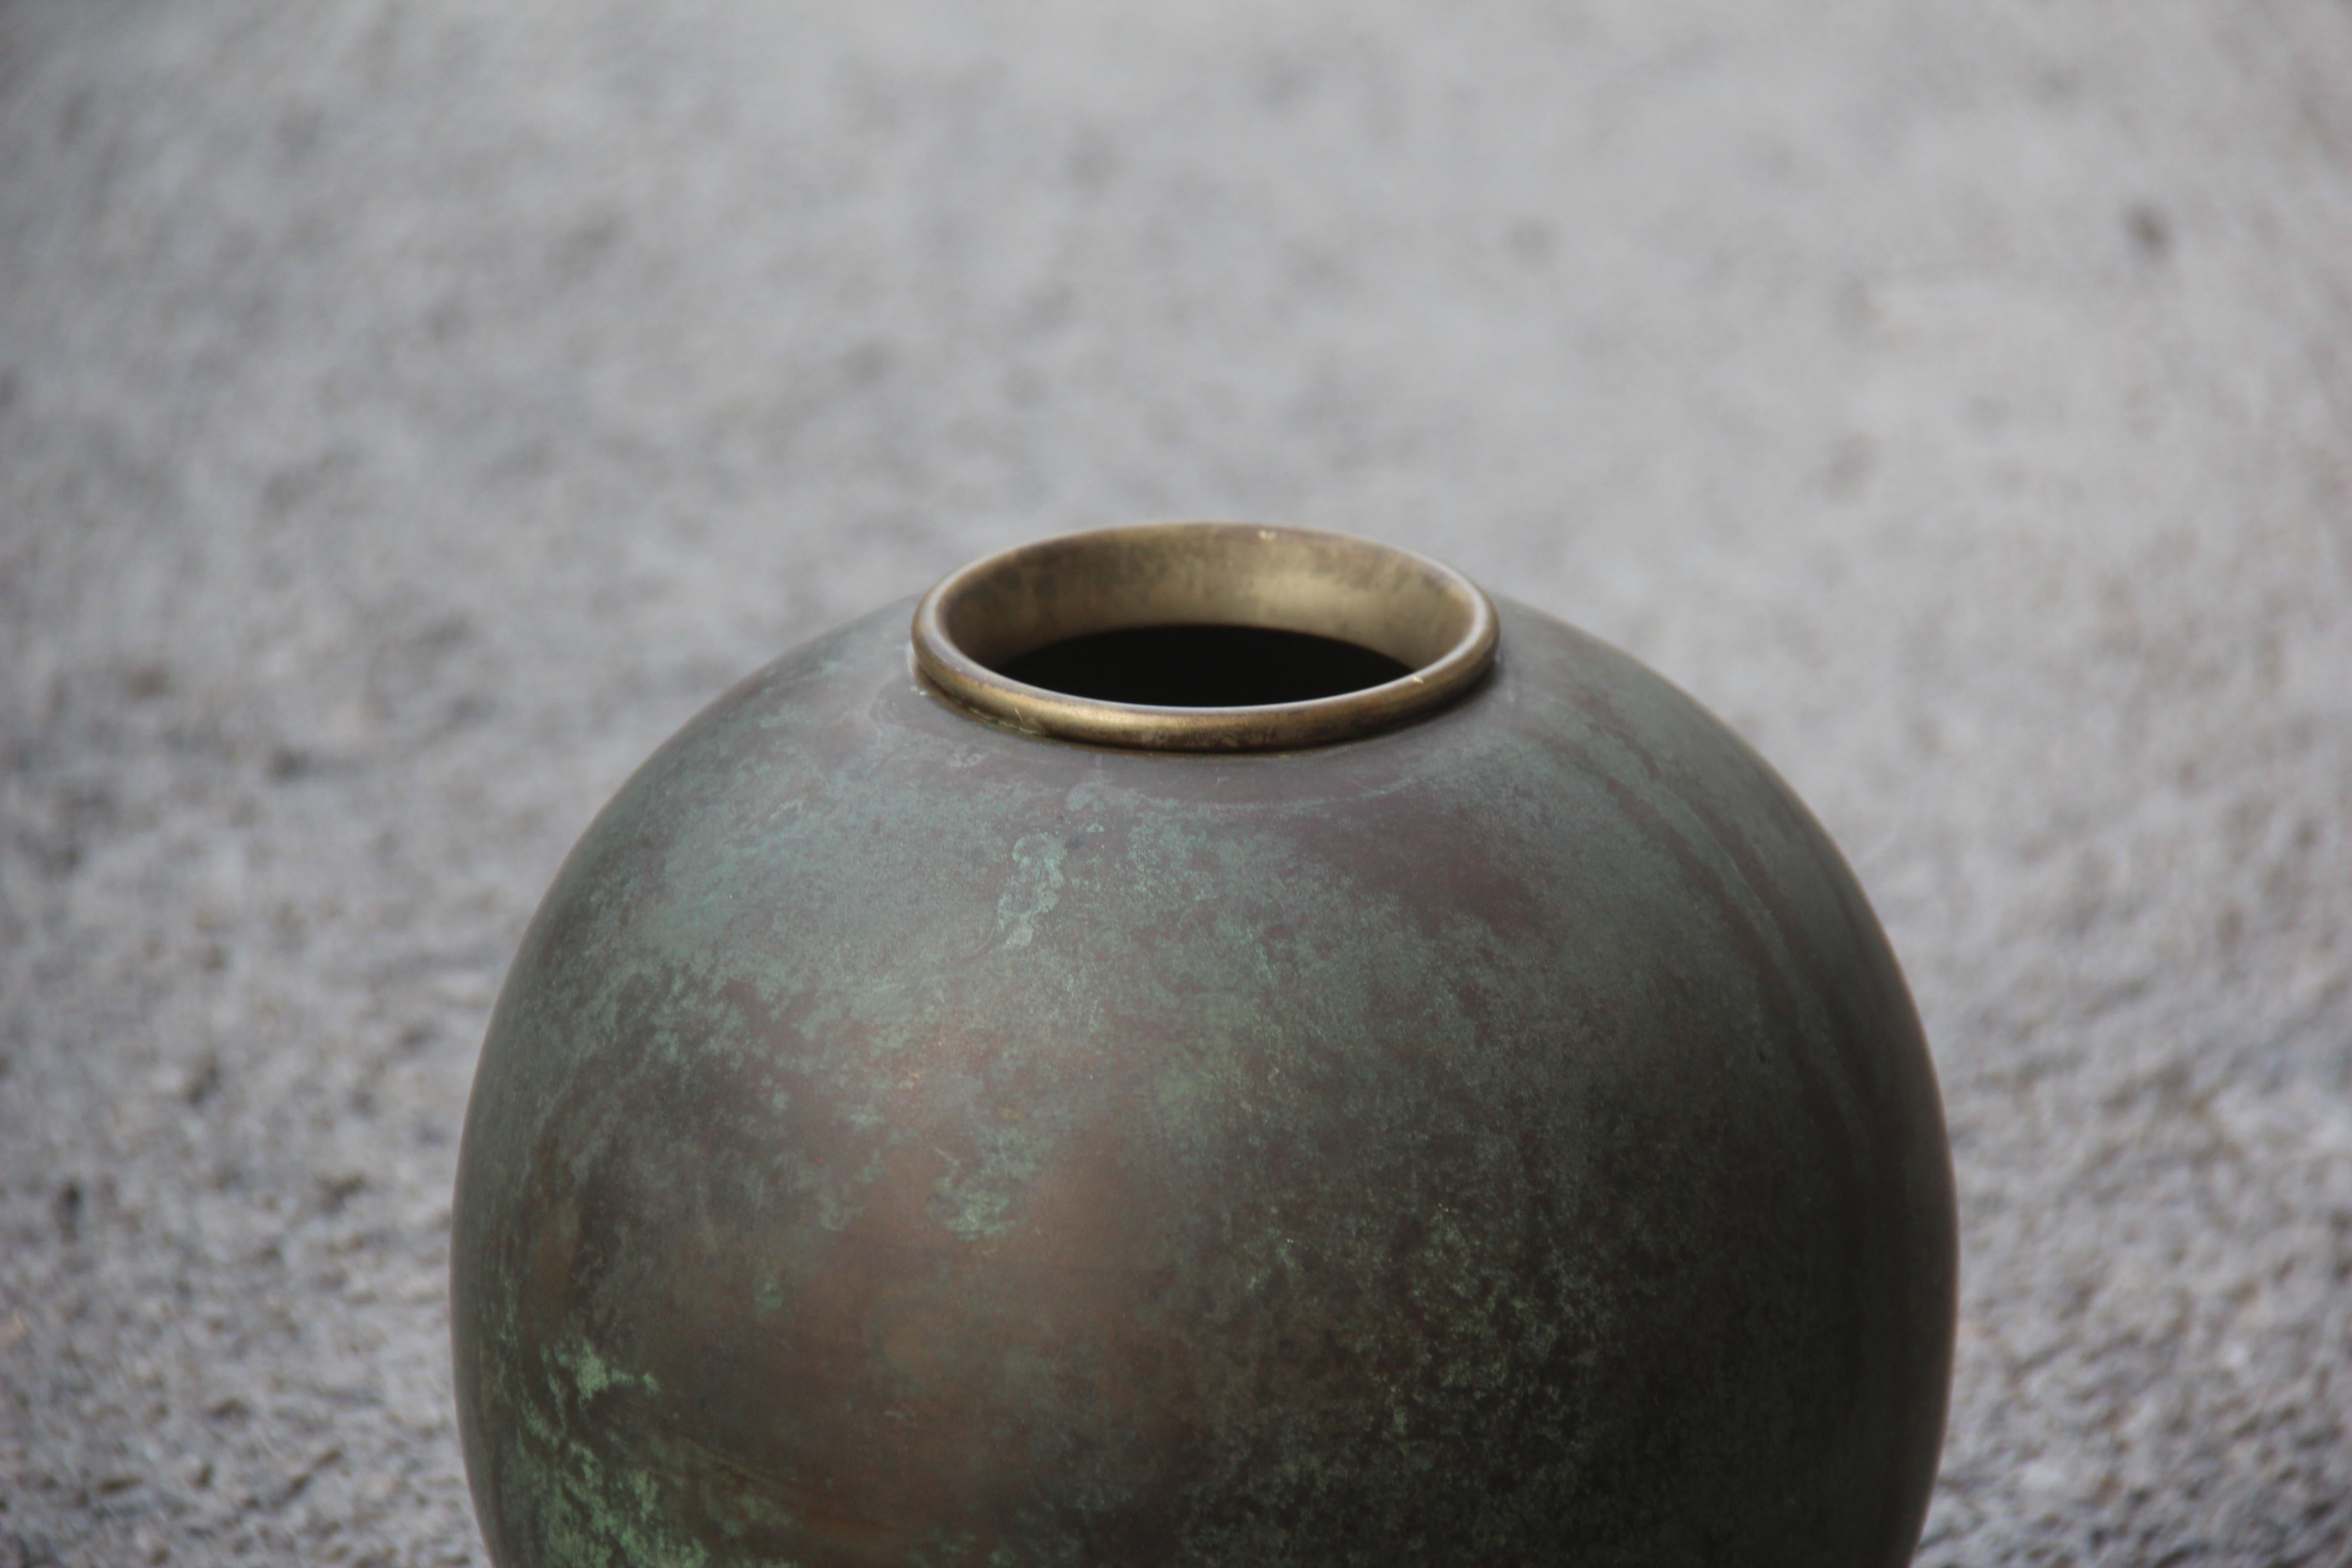 Brass Ball vase Art Deco 1930 bronzed finishing Italian design Nino Ferrari Gio Ponti attributed.